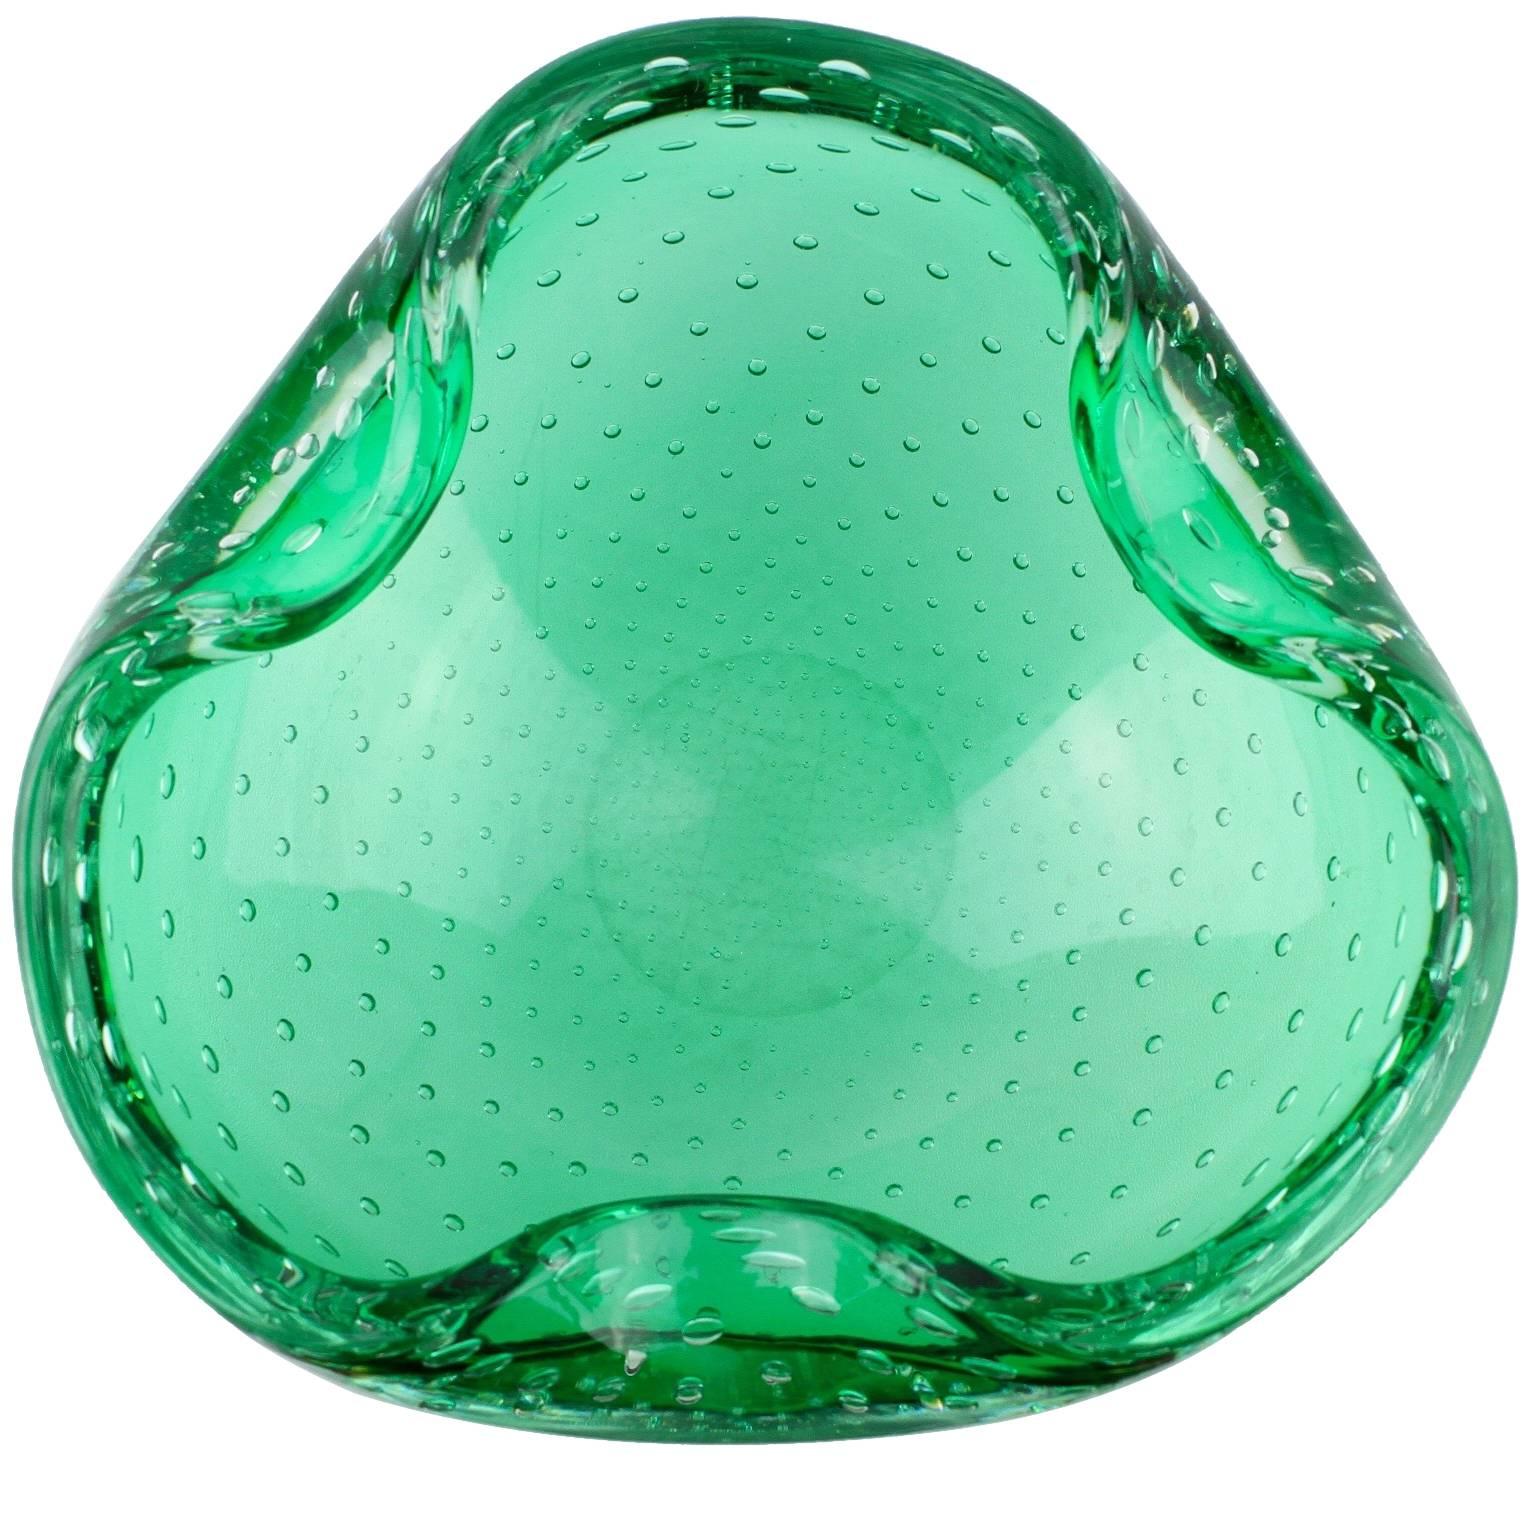 Large 1950s Green Murano Bubble Glass Bowl Attributed to Carlo Scarpa for Venini